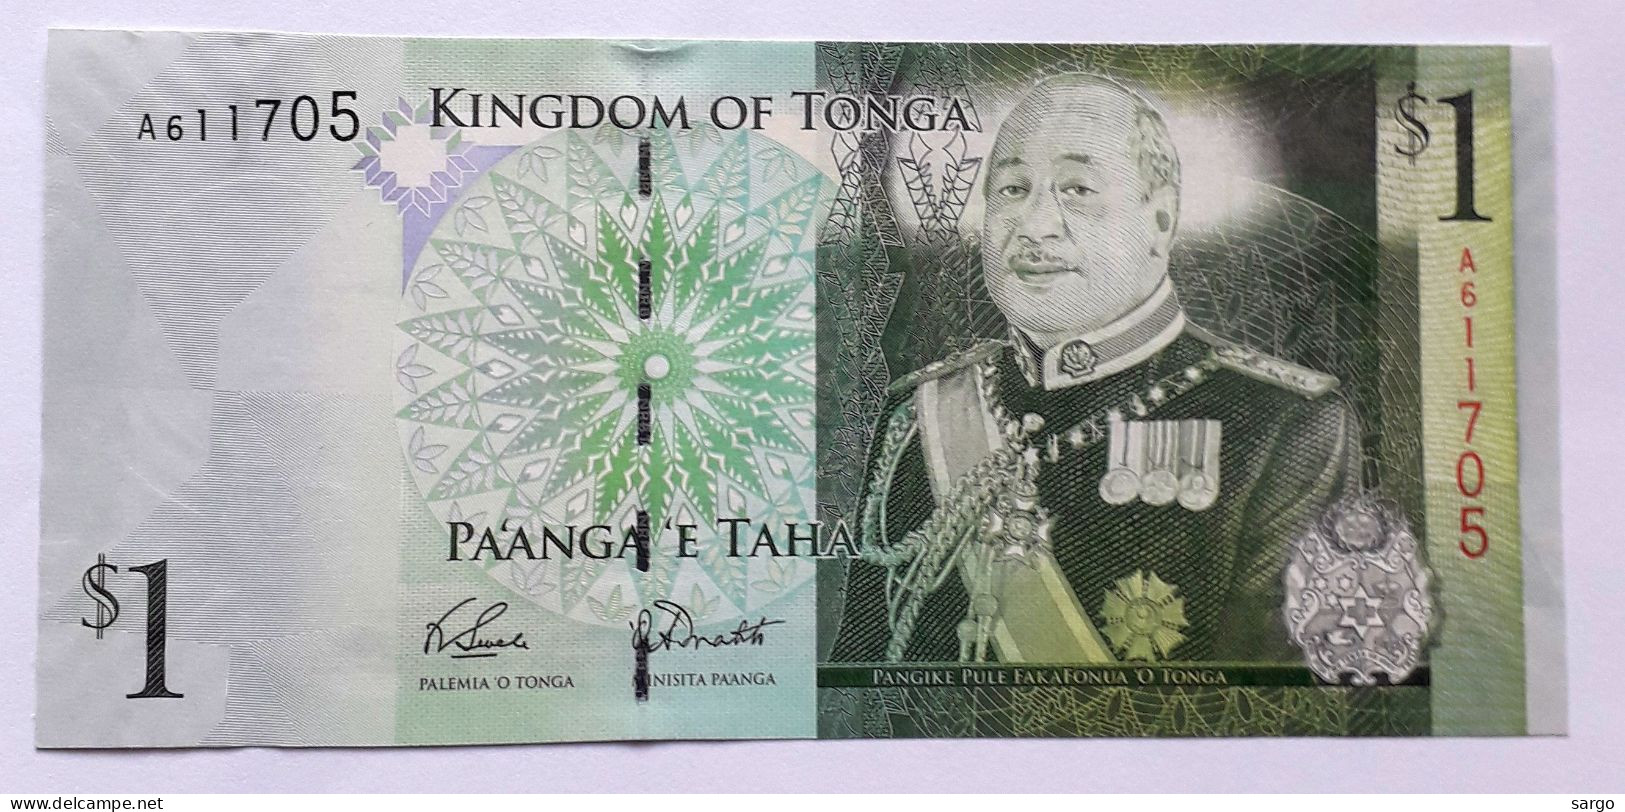 TONGA  - 1 PA'ANGA  - P 37  (2009) - UNC -  BANKNOTES - PAPER MONEY - Tonga